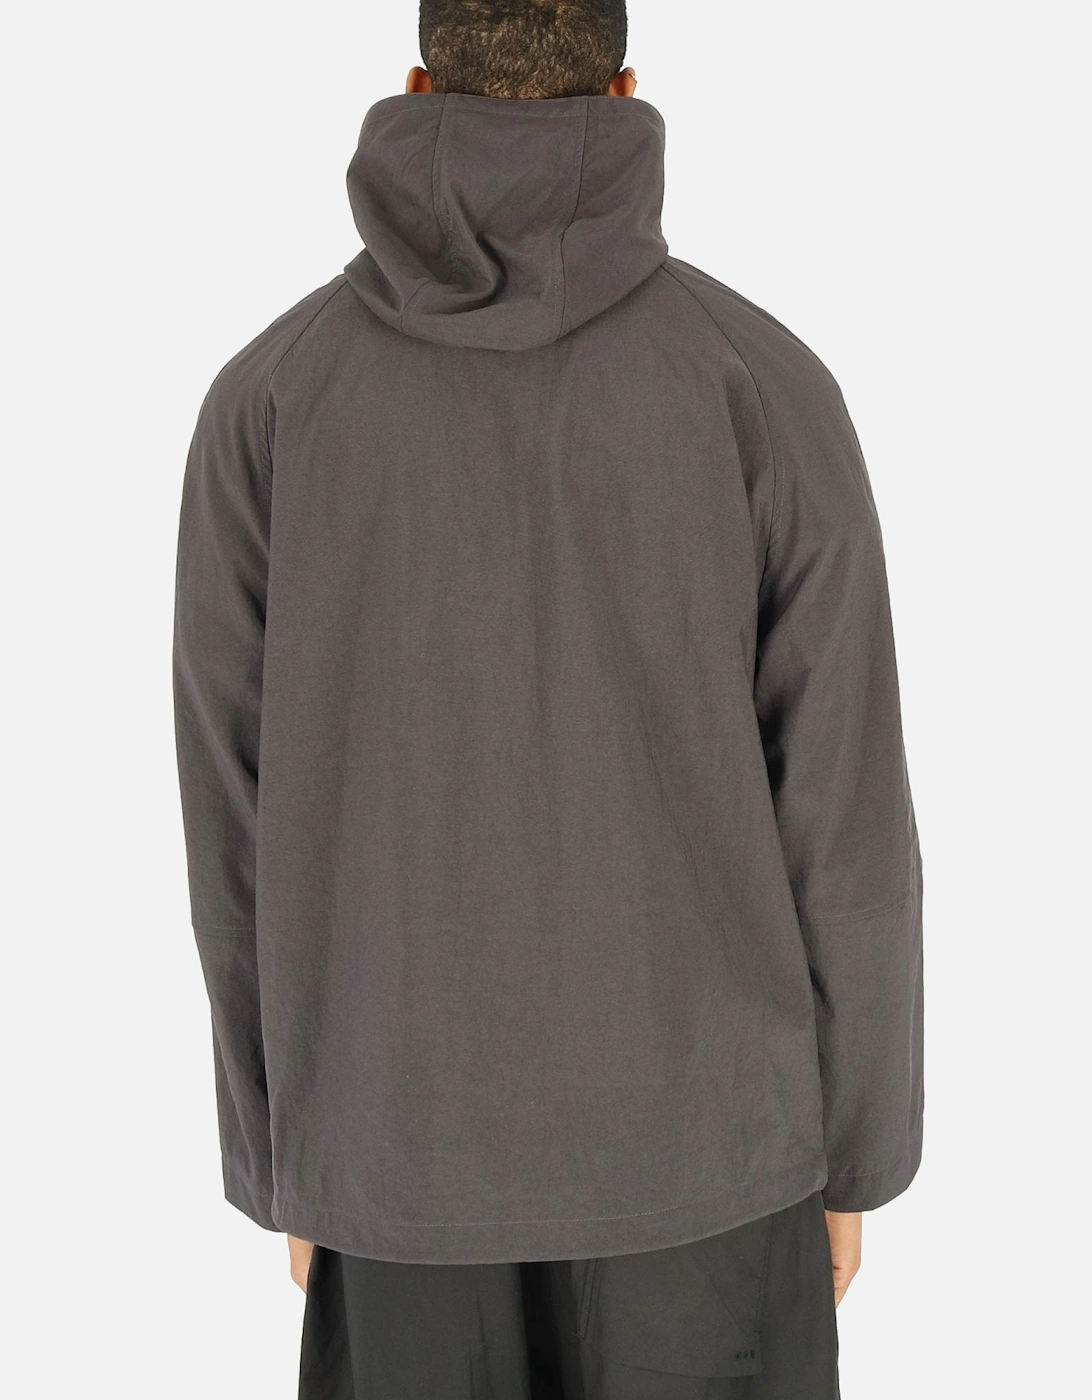 Proximity Black Hooded Pullover Smock Jacket